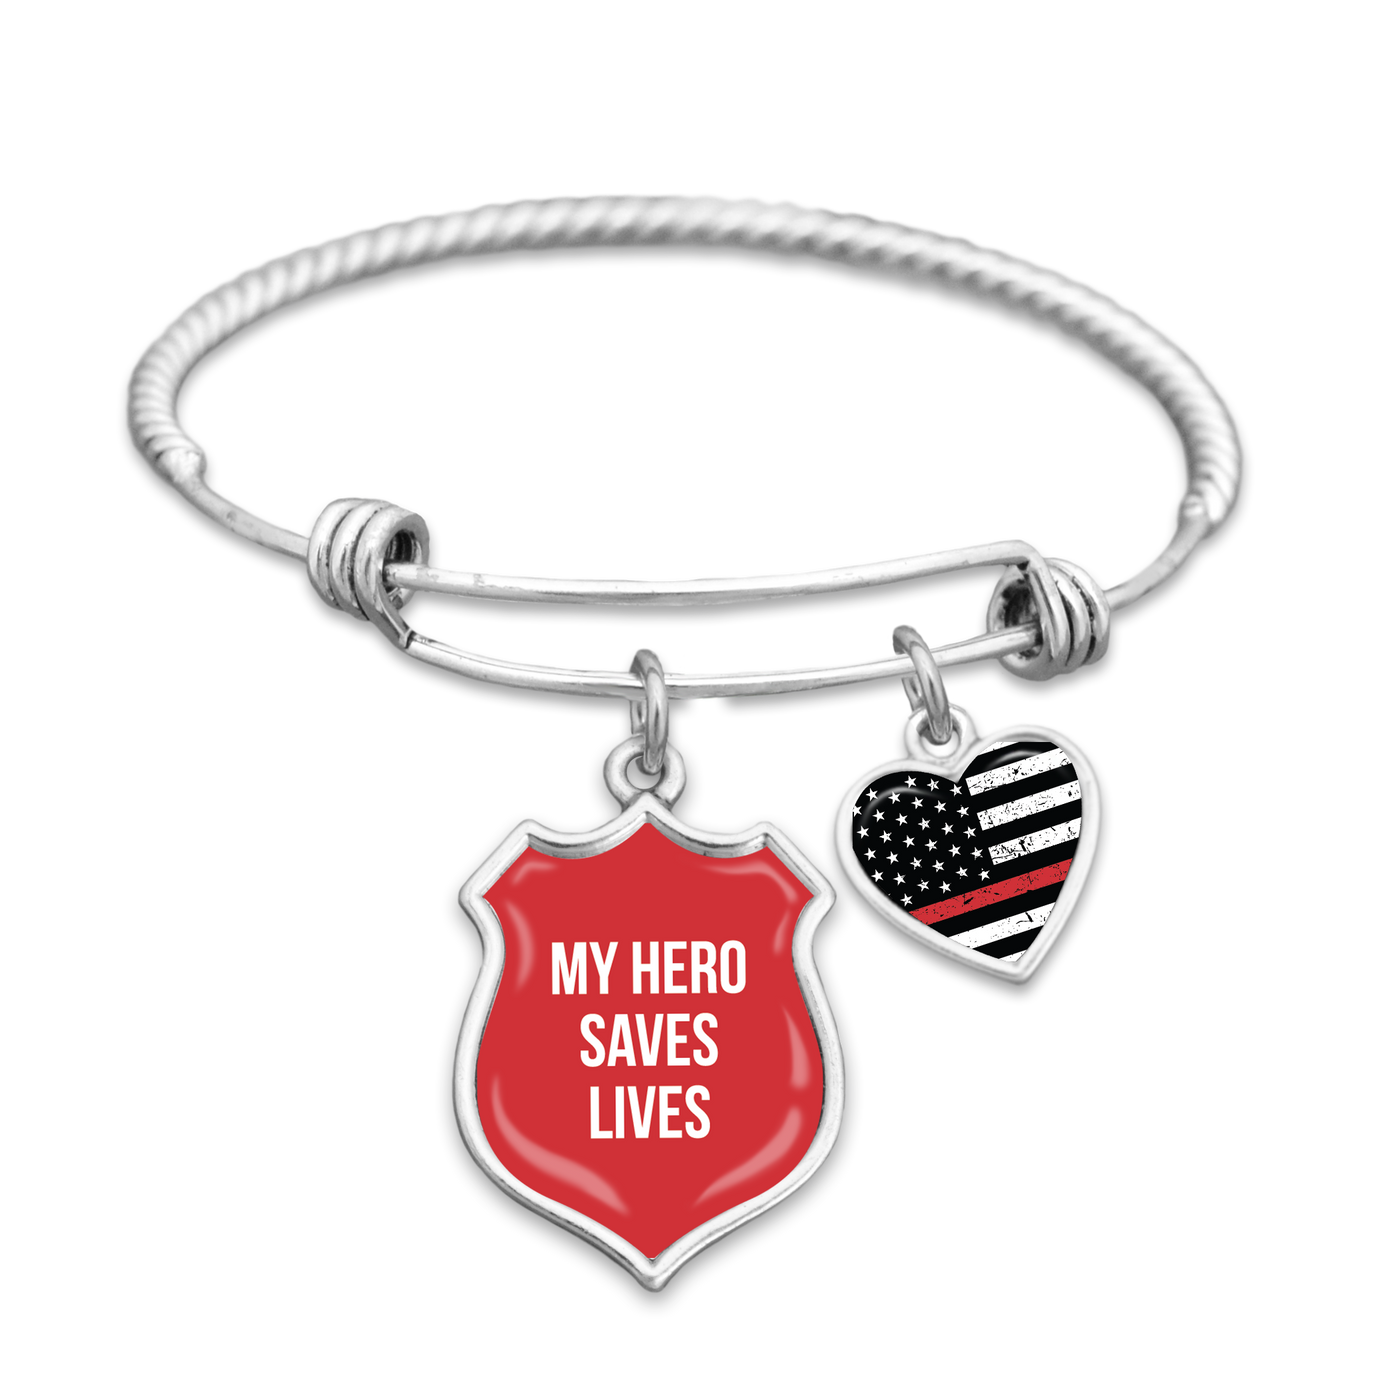 My Hero Saves Lives Thin Red Line Charm Bracelet